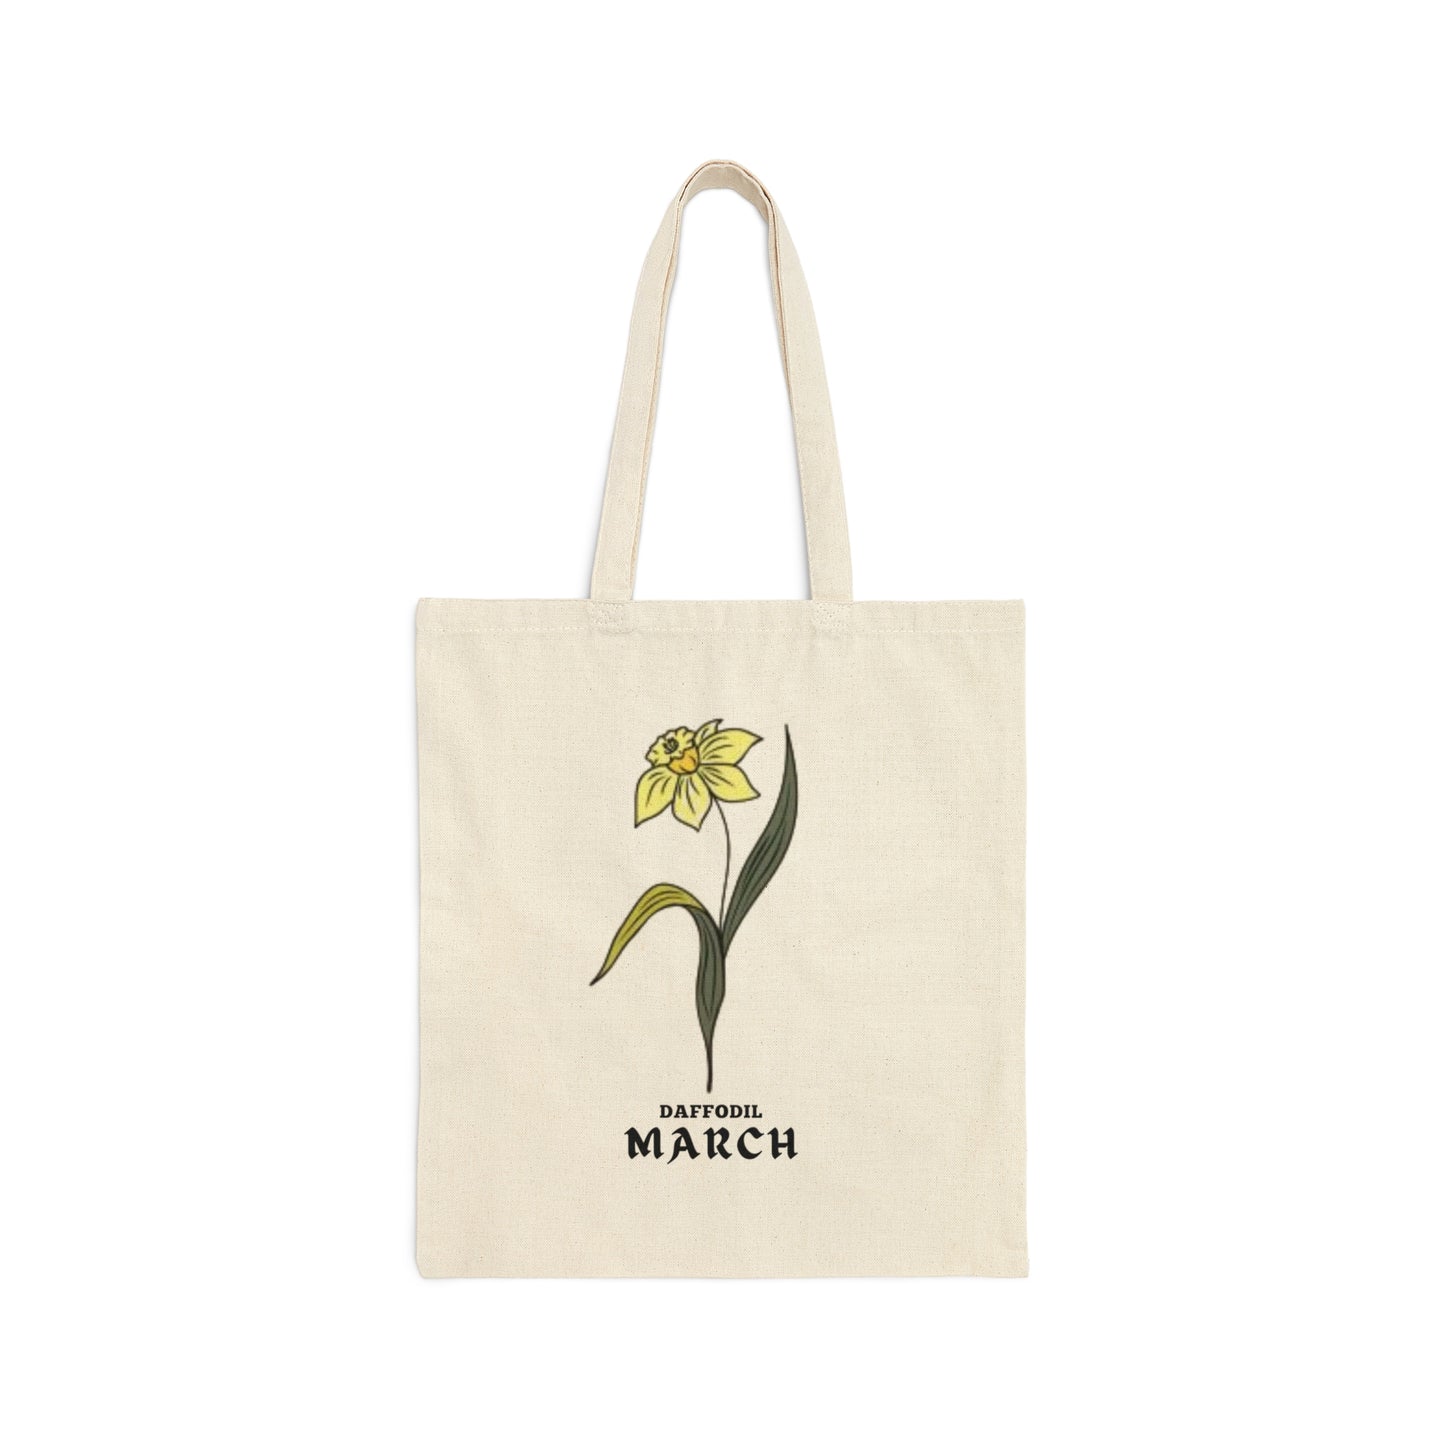 MARCH BIRTH MONTH FLOWER TOTE BAG (Daffodil)